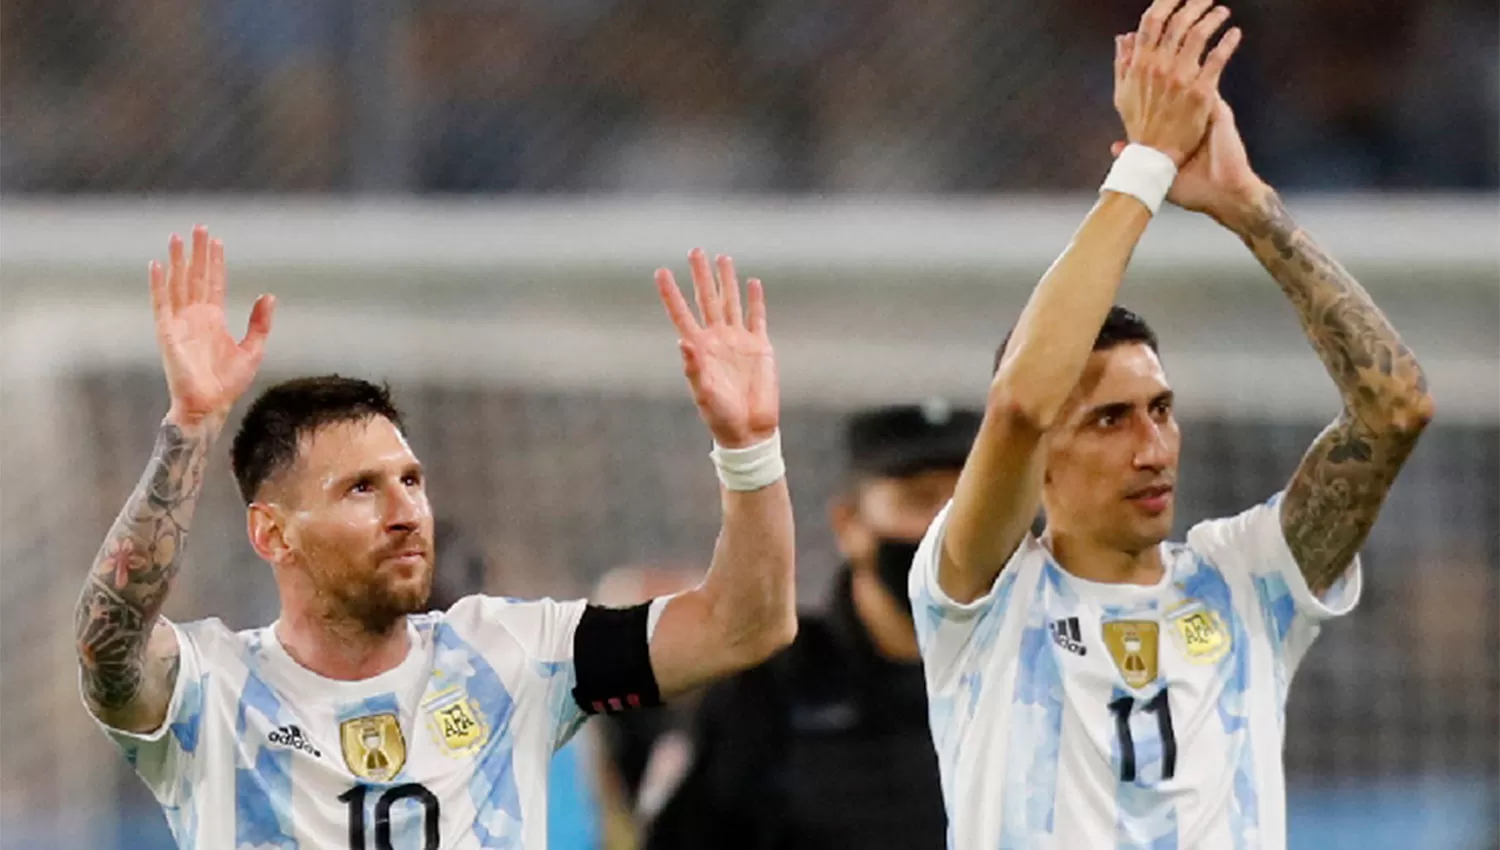 Messi abrió la incertidumbre: después del Mundial me voy a replantear muchas cosas